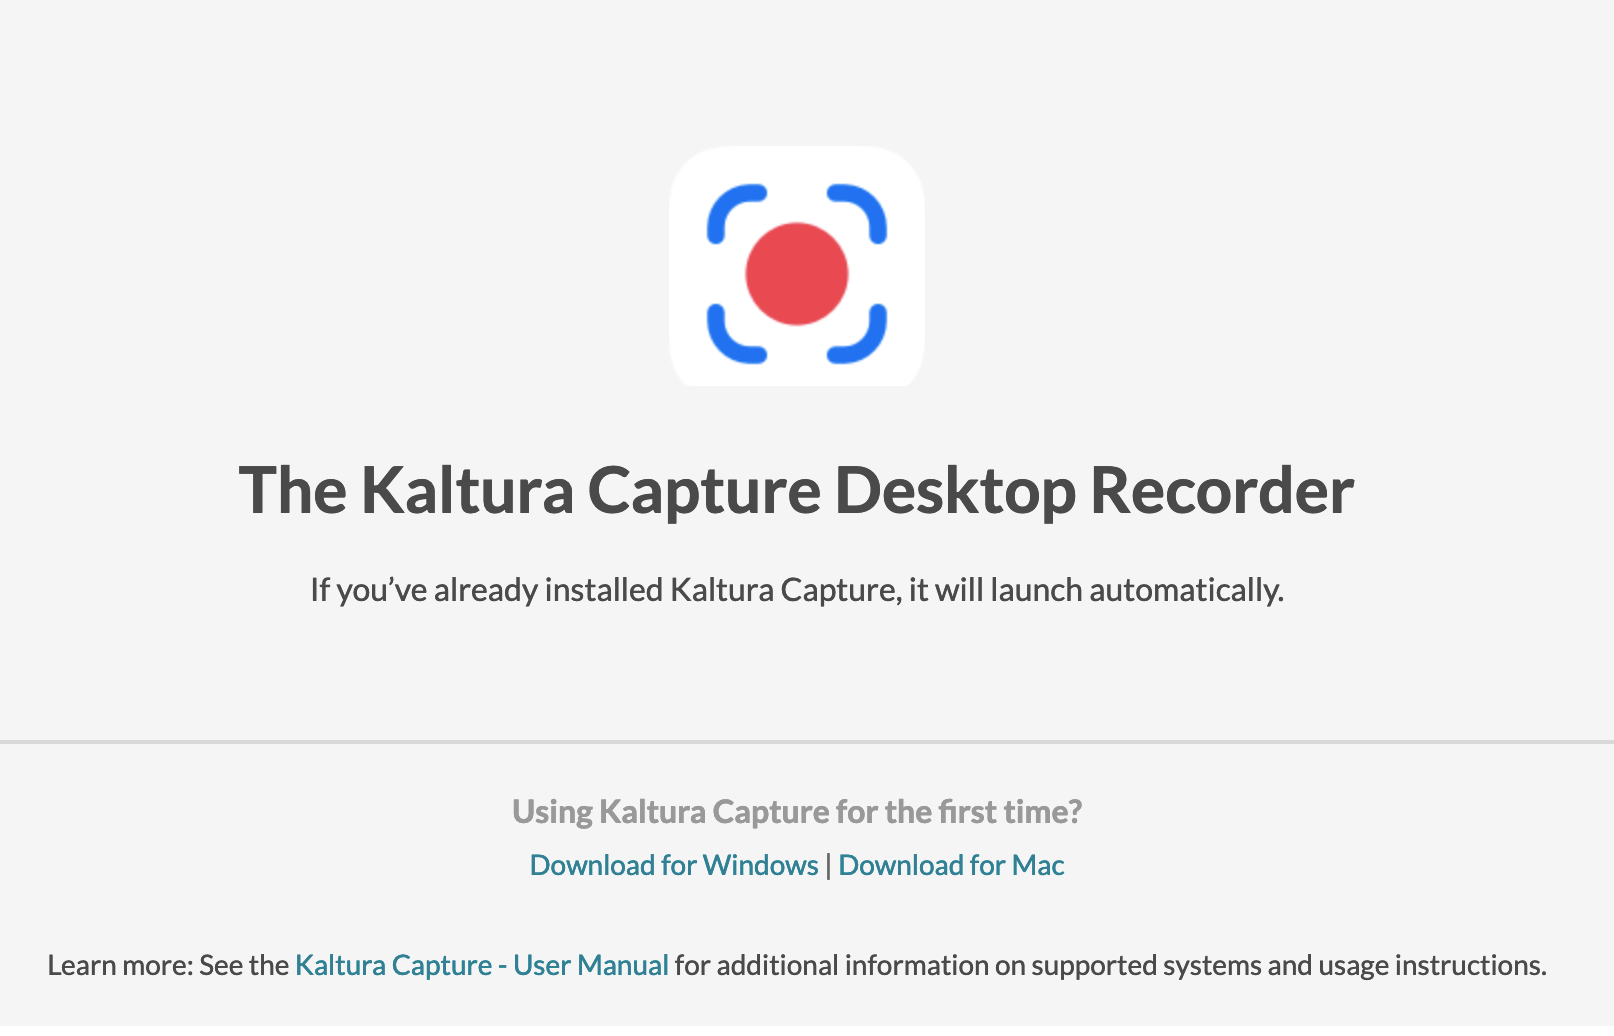 Kaltura Capture Desktop Recorder download screen